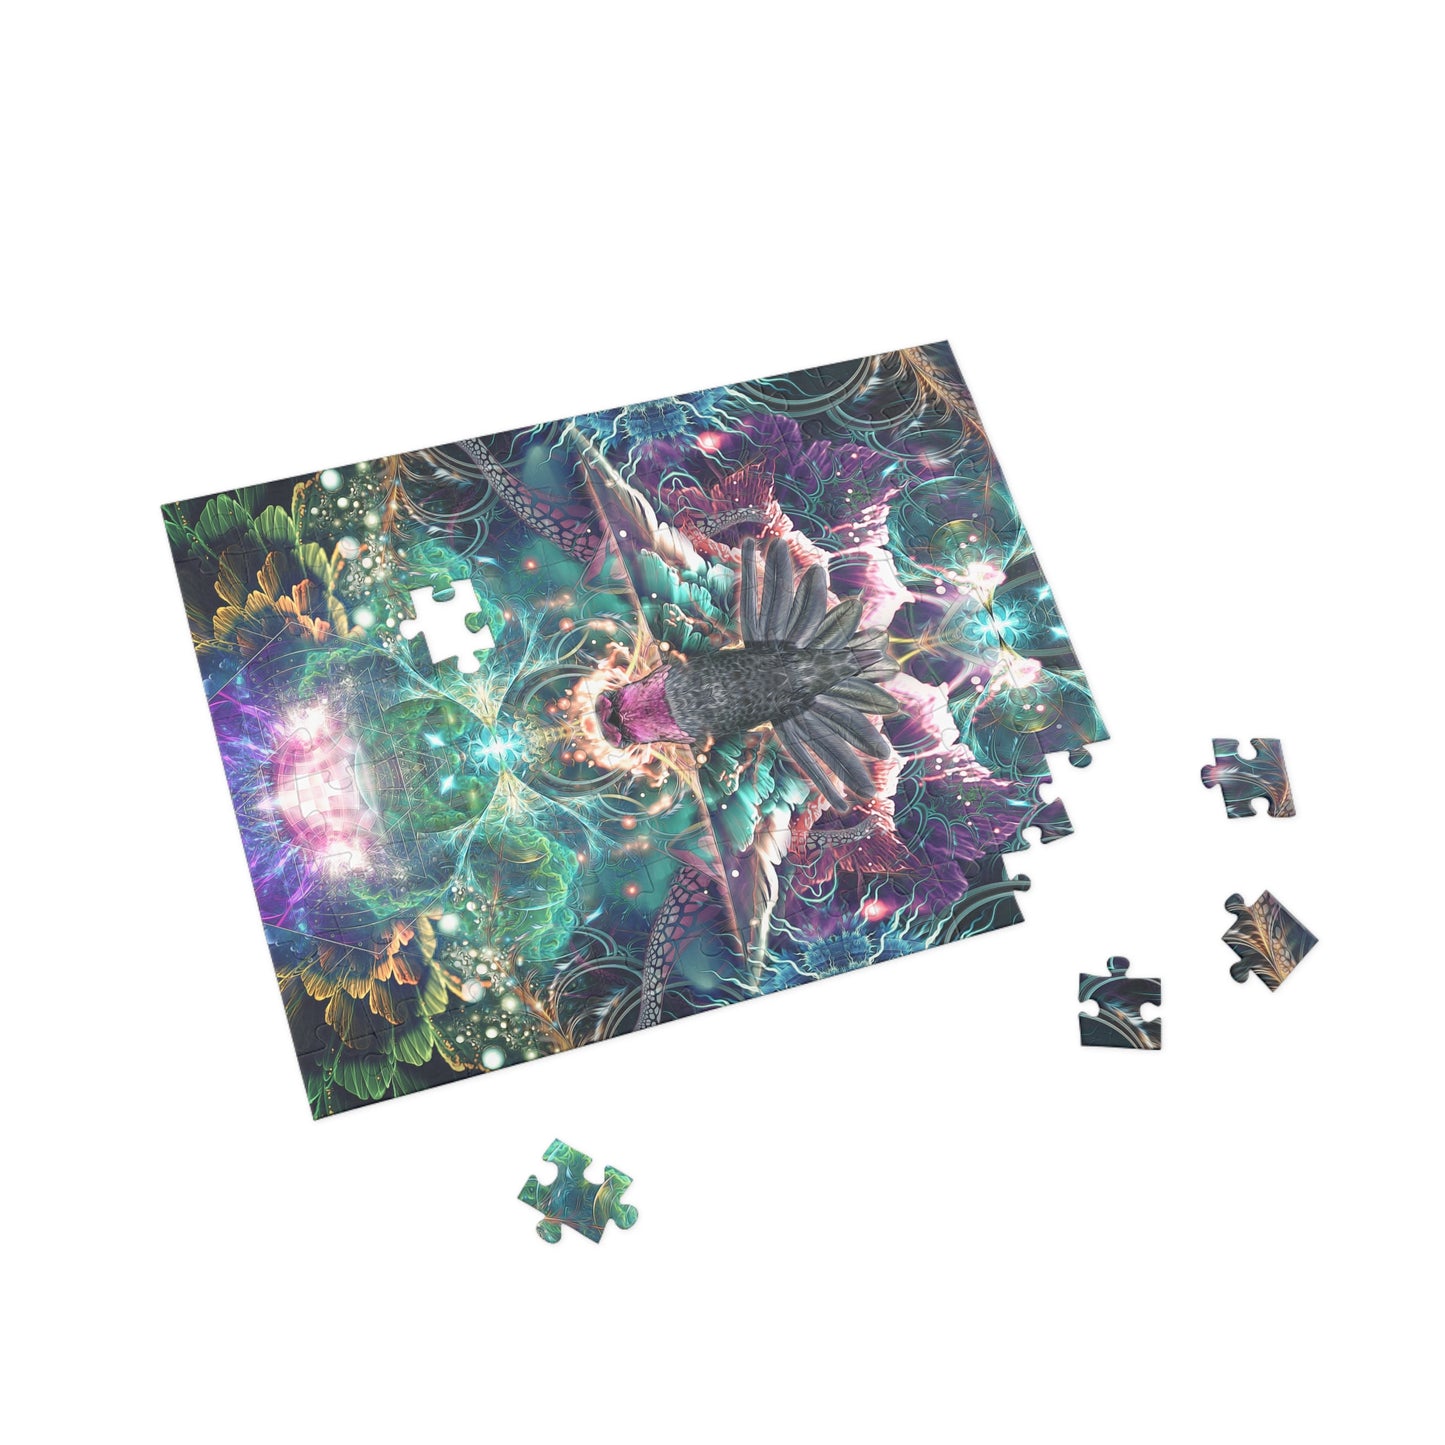 "Nectar" Jigsaw Puzzle (96, 252, 500, 1000-Piece)